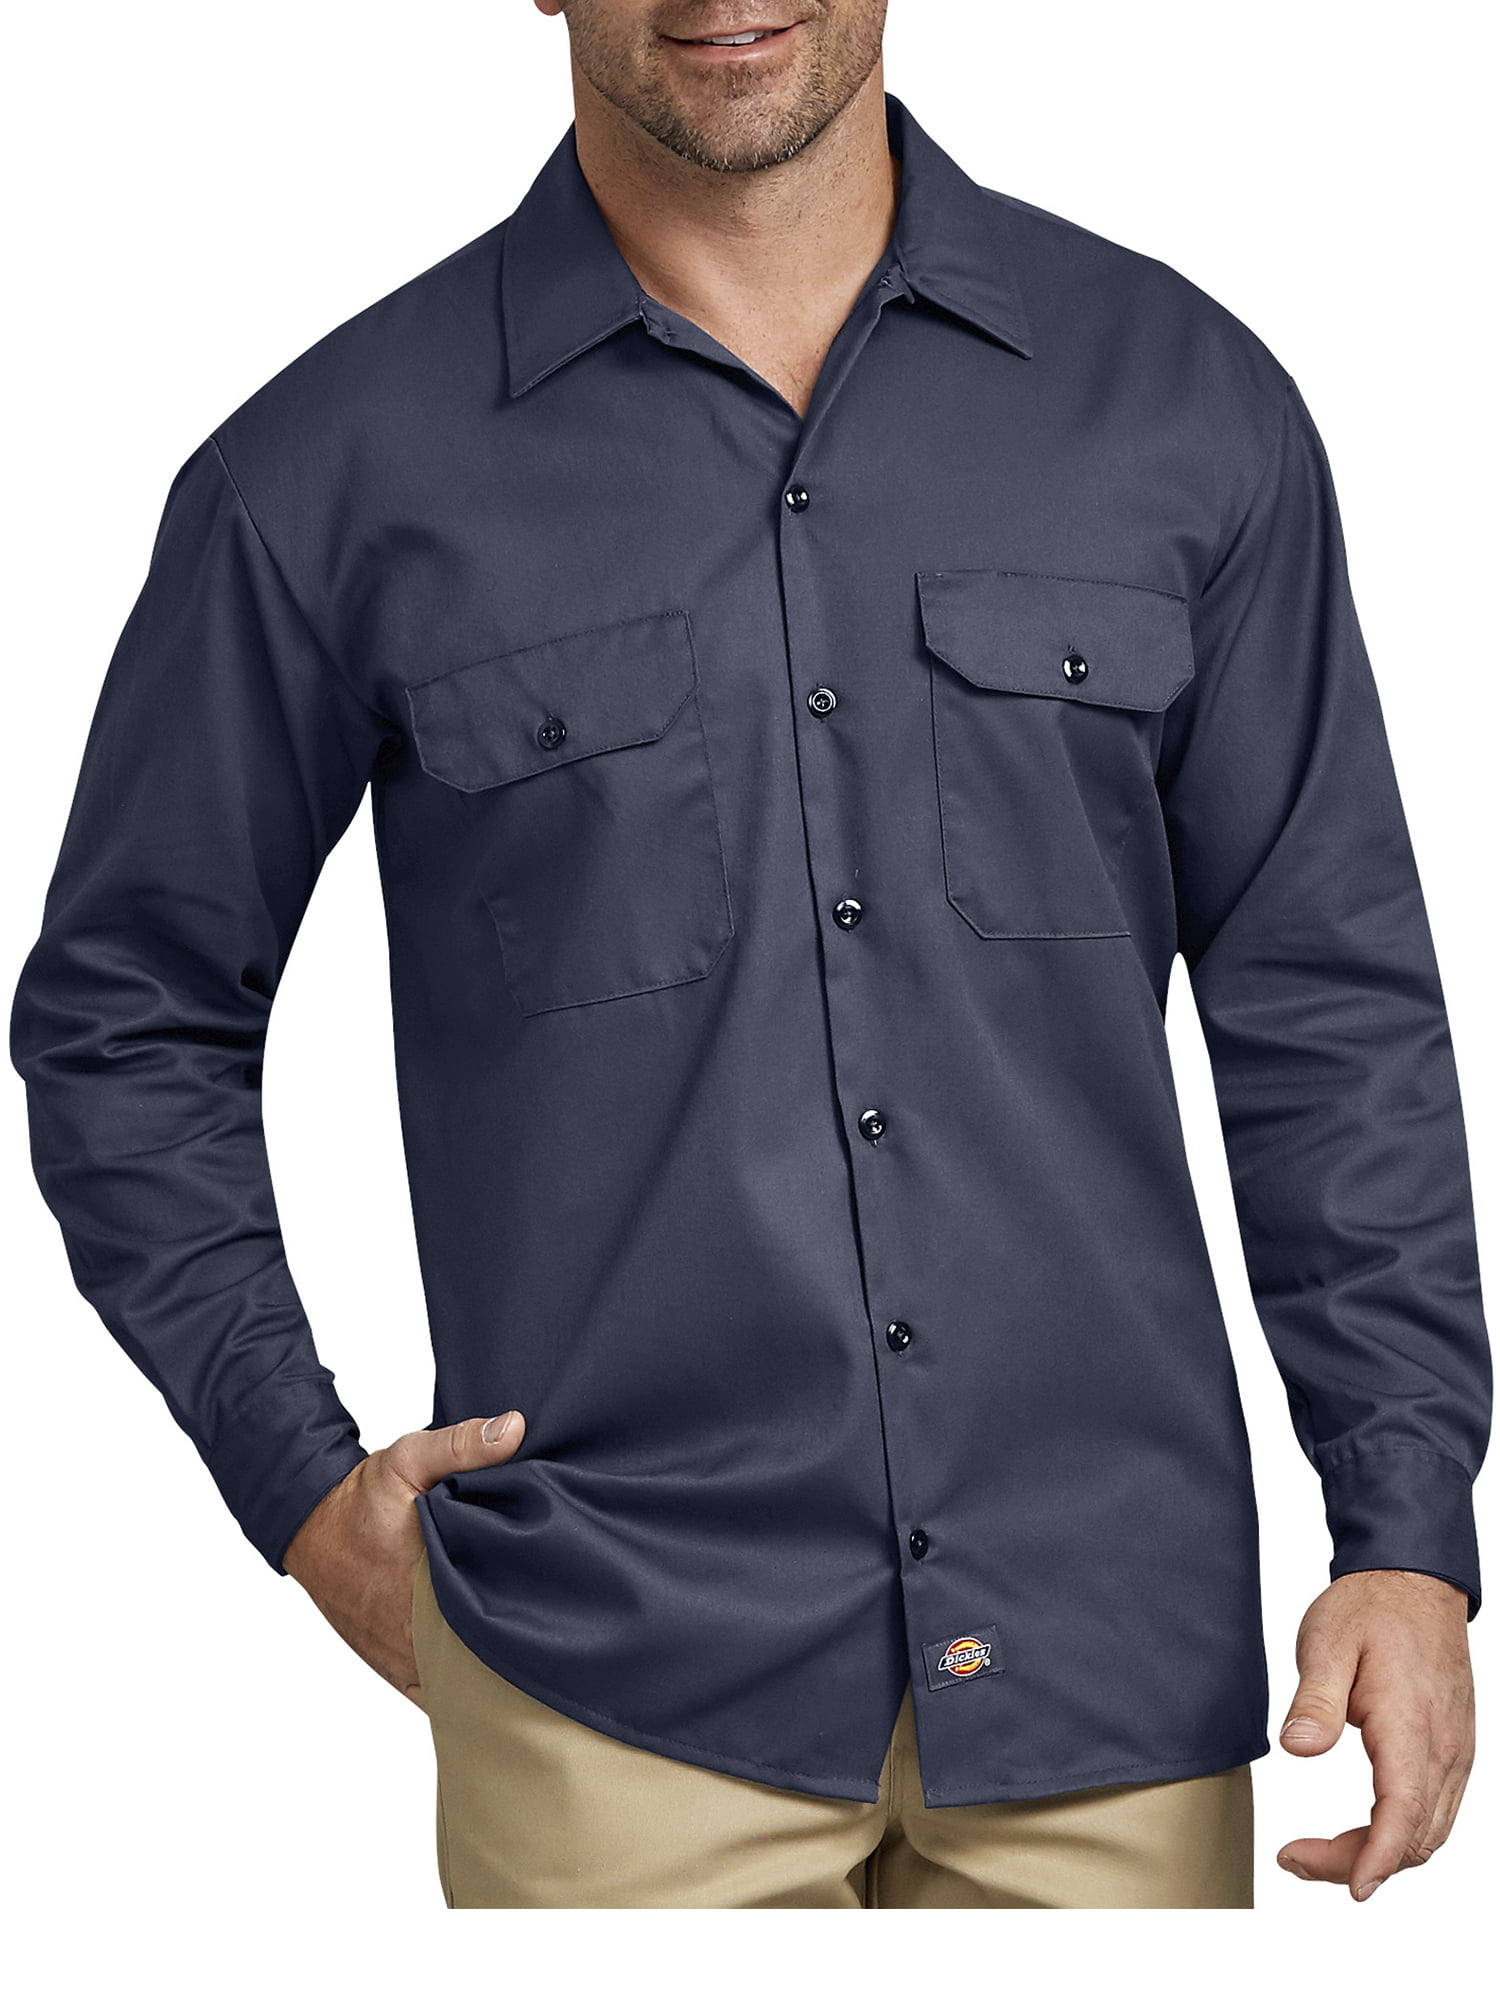 Big Men's Long Sleeve Twill Work Shirt - Walmart.com